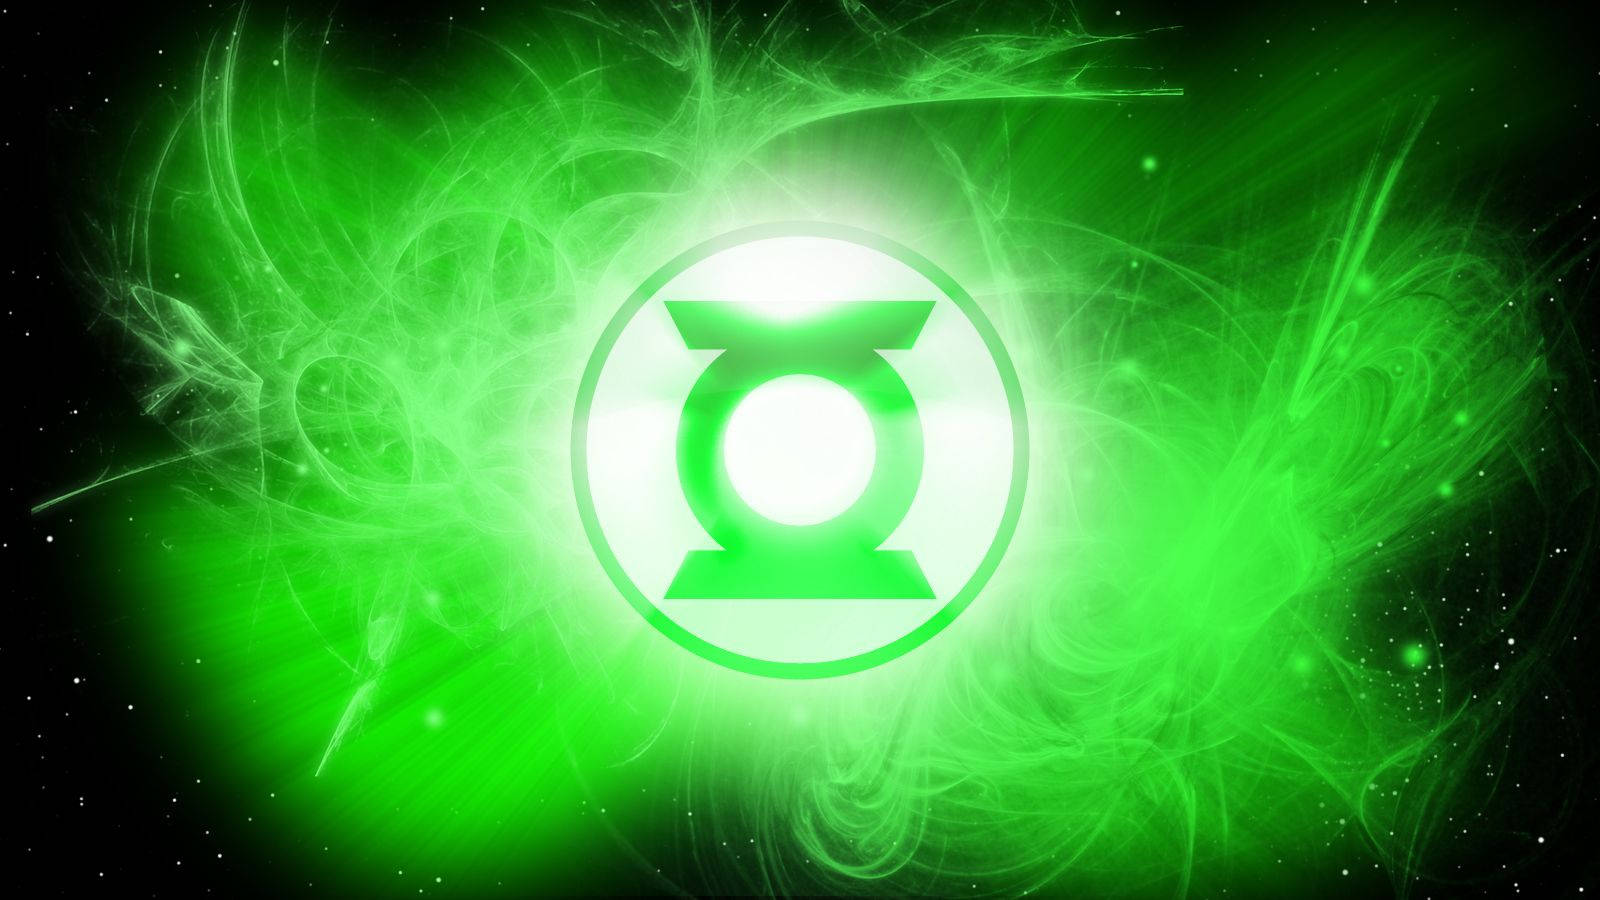 Digital Green Lantern Logo Wallpaper